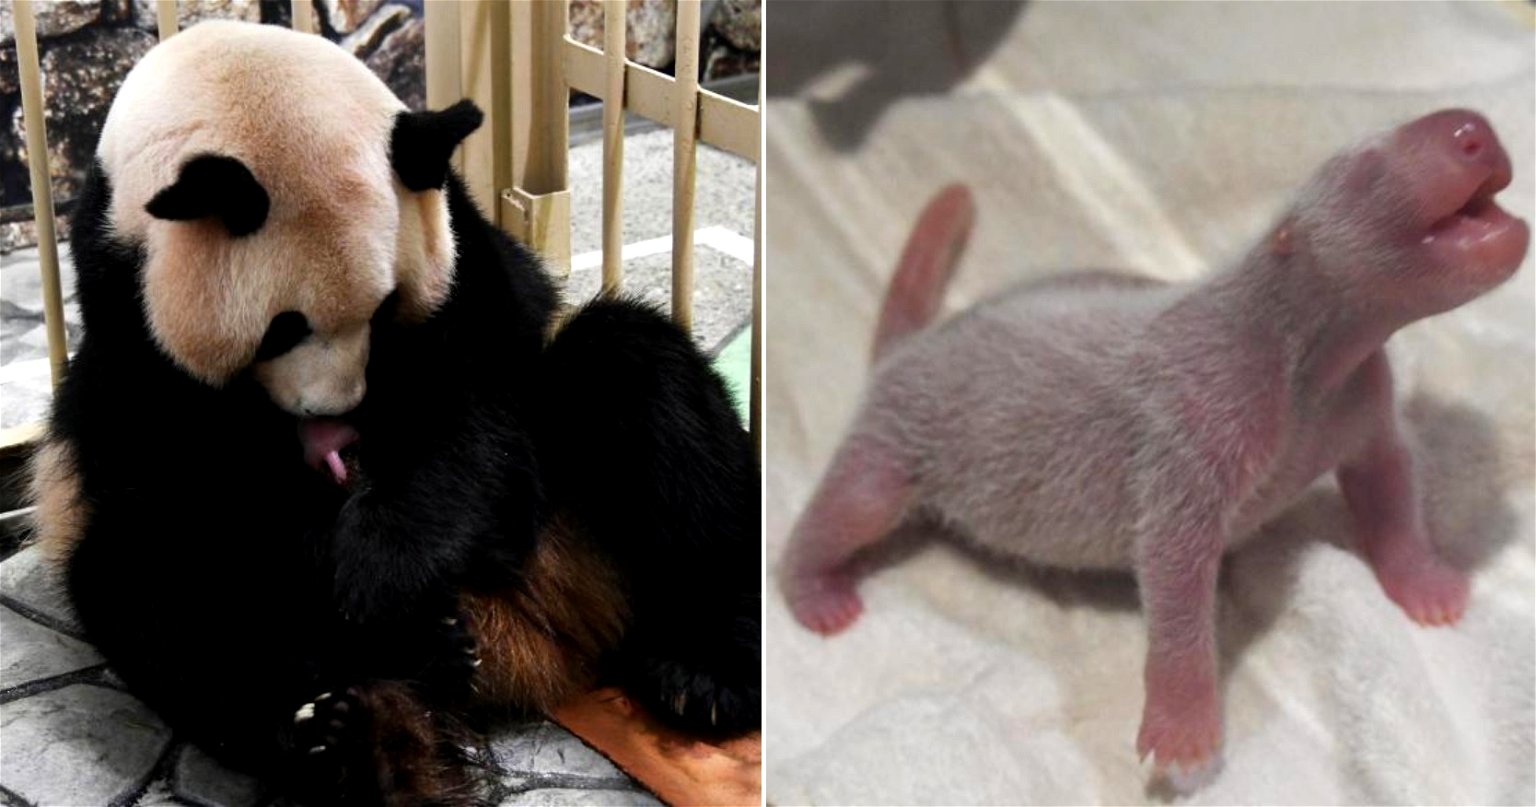 Japanese Zoo Welcomes First Newborn Panda Cub in 2 Years